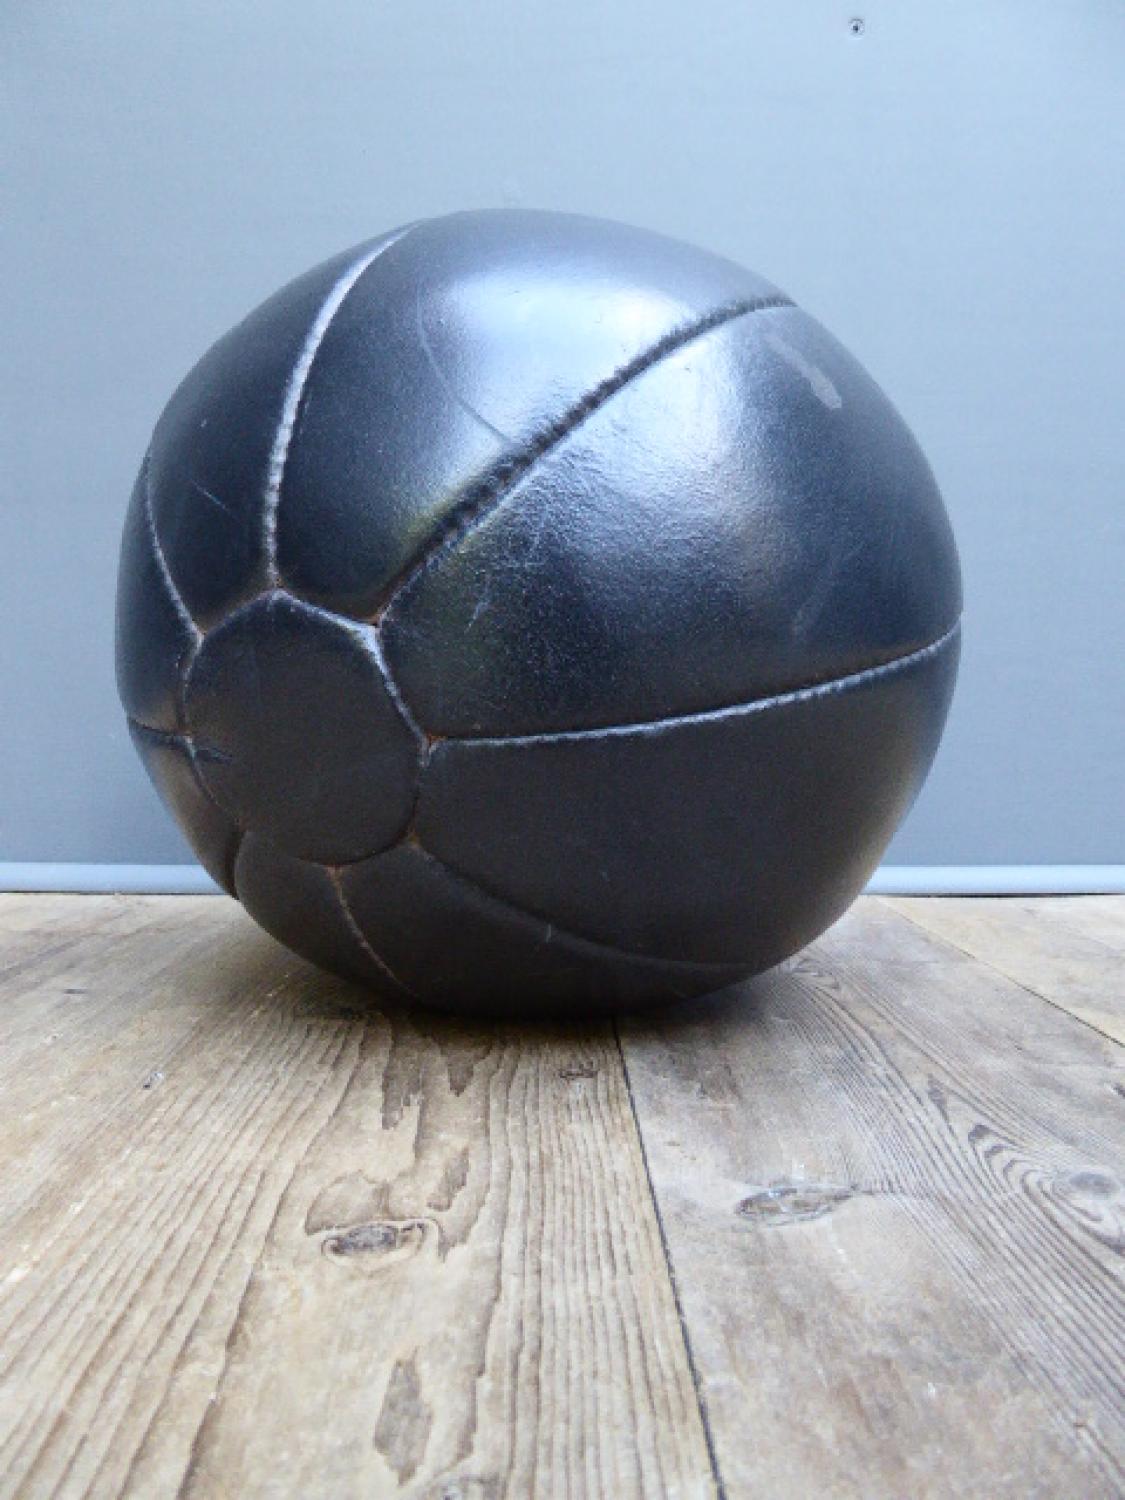 Leather Medicine Ball